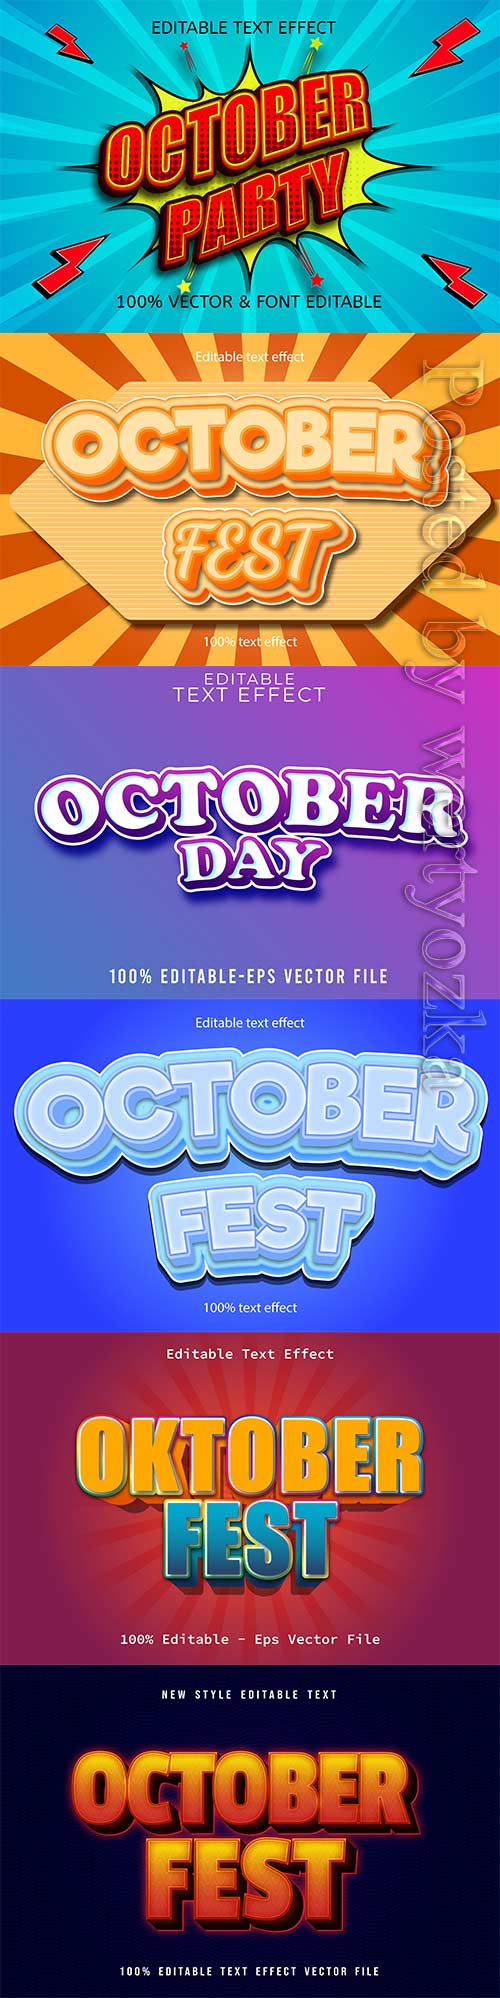 October fest editable text effect vol 10